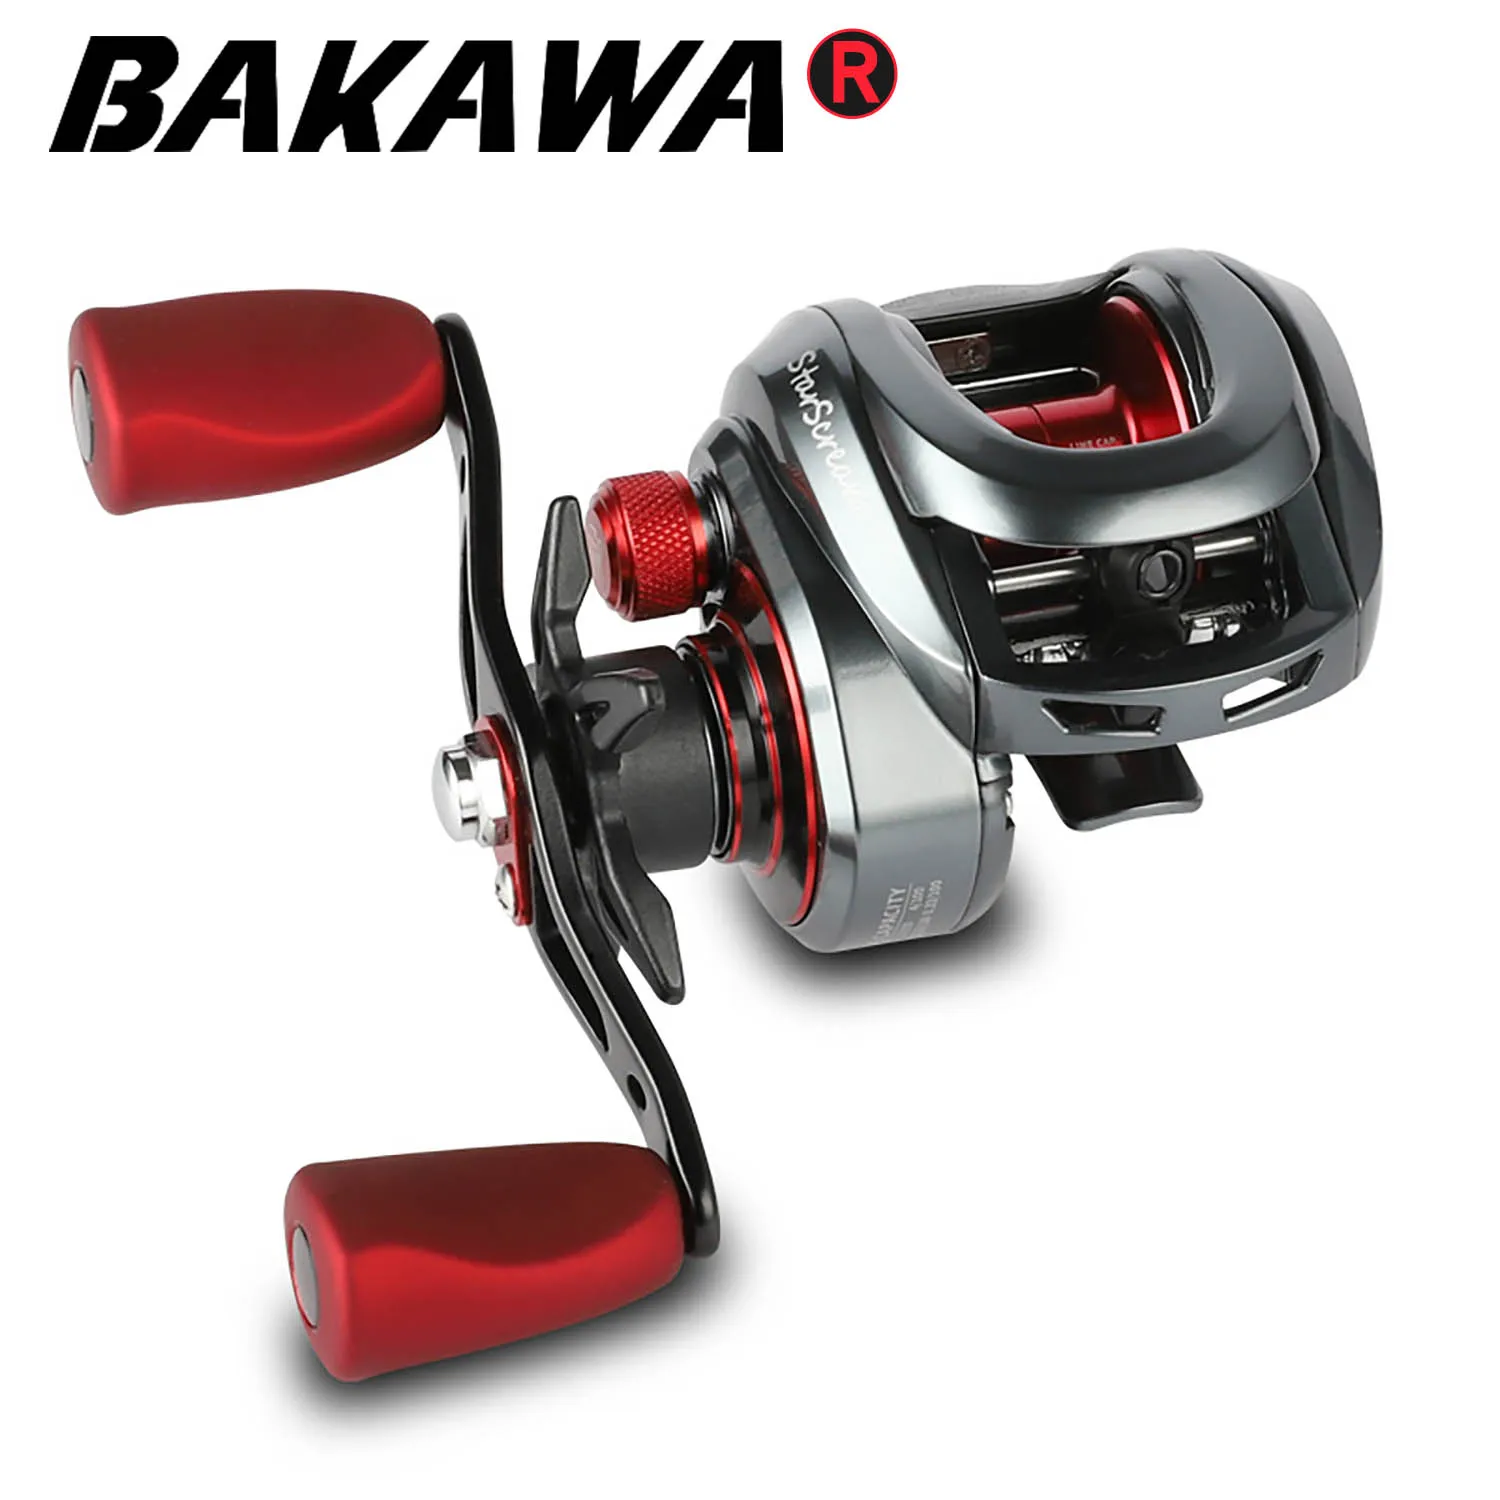 BAKAWA Baitcasting Fishing Reel Left/Right Hand Tackle Saltwater SS200 7.3:1  High Speed Casting Wheel 8+1BB 8KG Max Drag